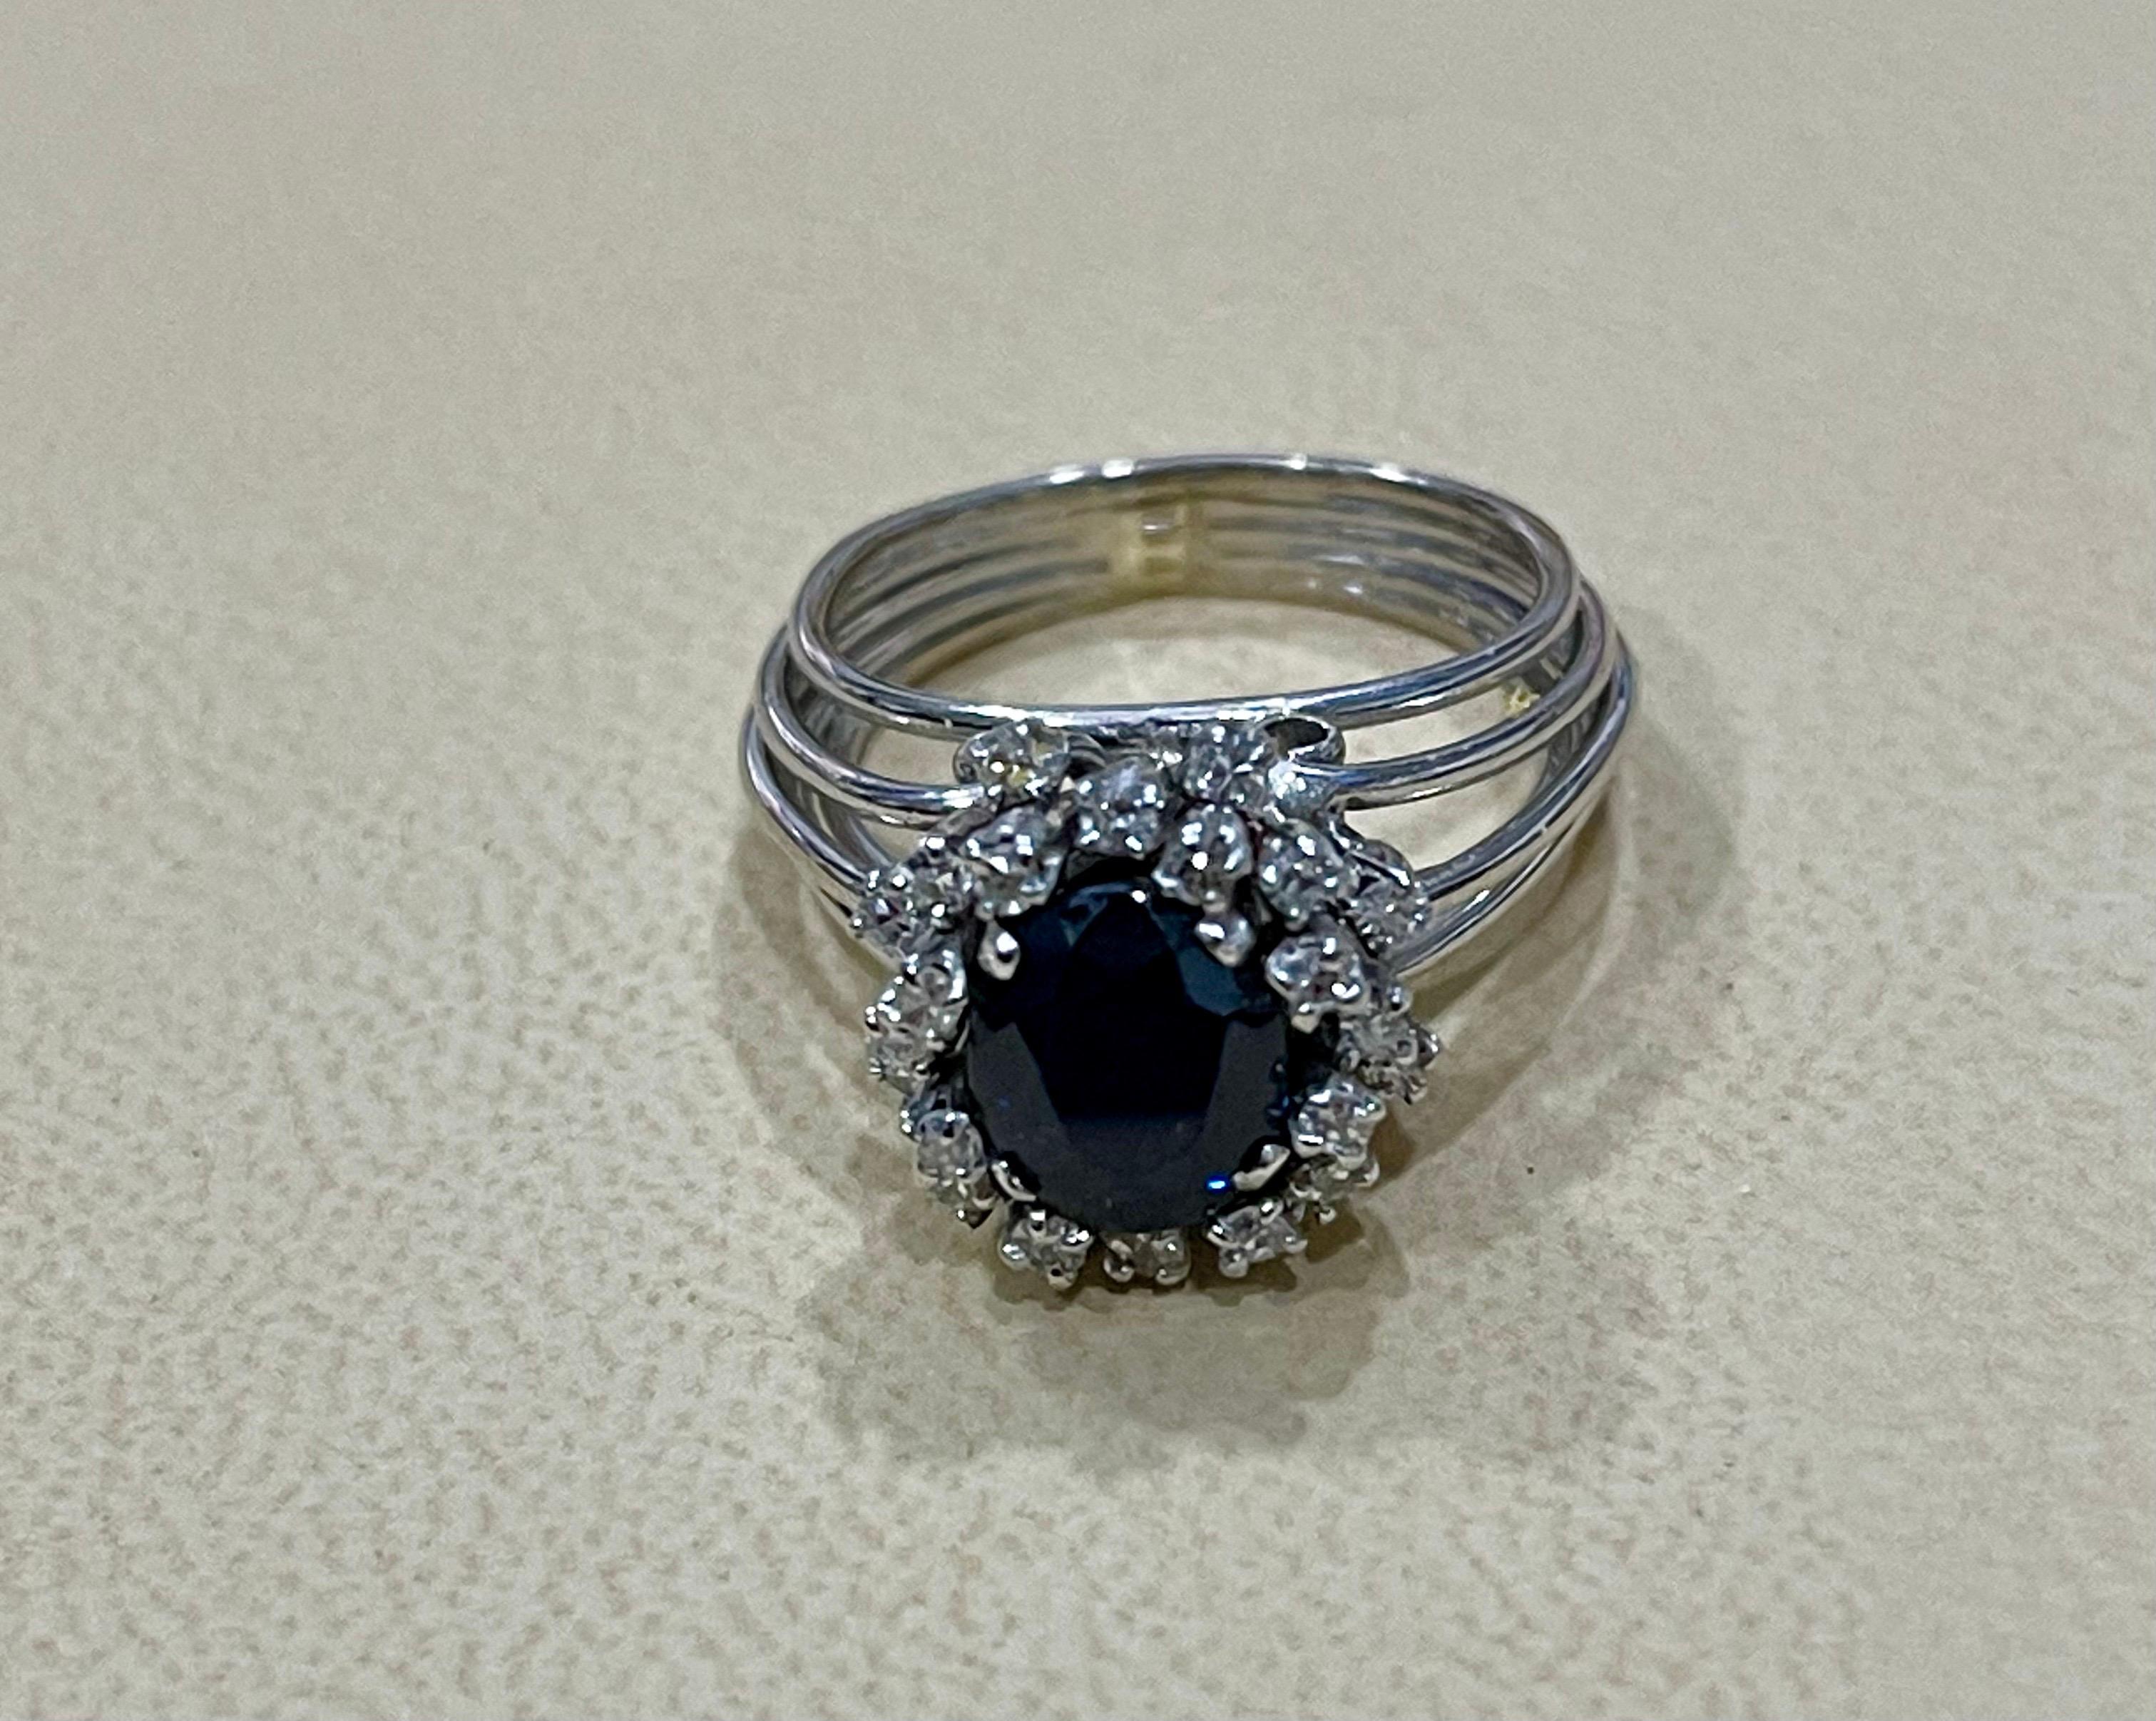 3 Ct Mid Night Blue Sapphire and 0.25 Ct Diamond Cocktail Ring, Platinum, Estate 6